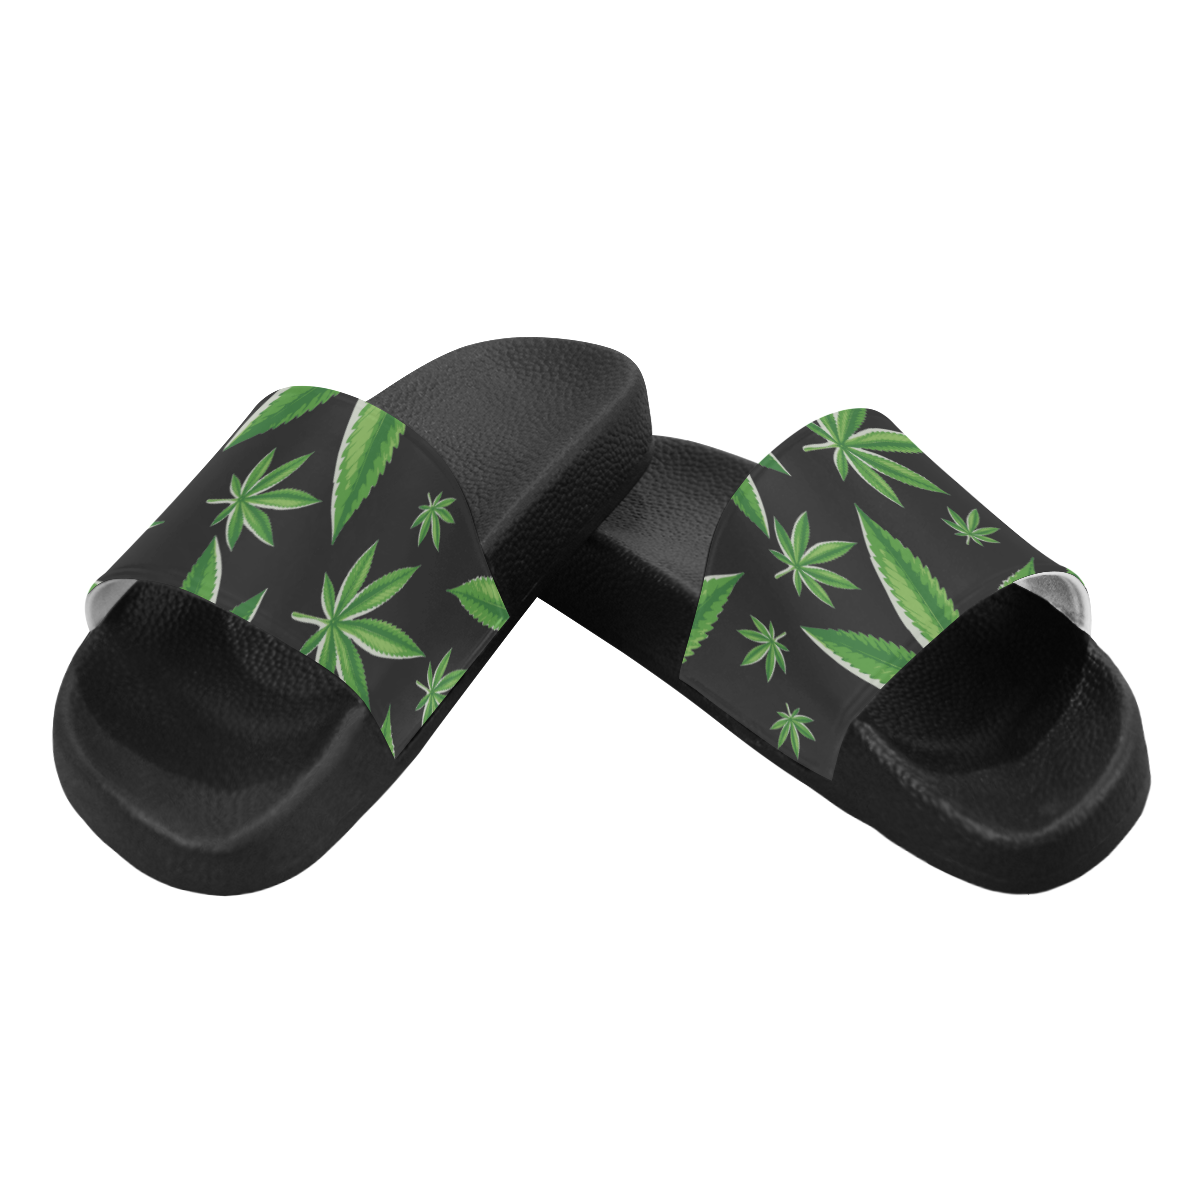 Cannabis Women's Slide Sandals (Model 057)